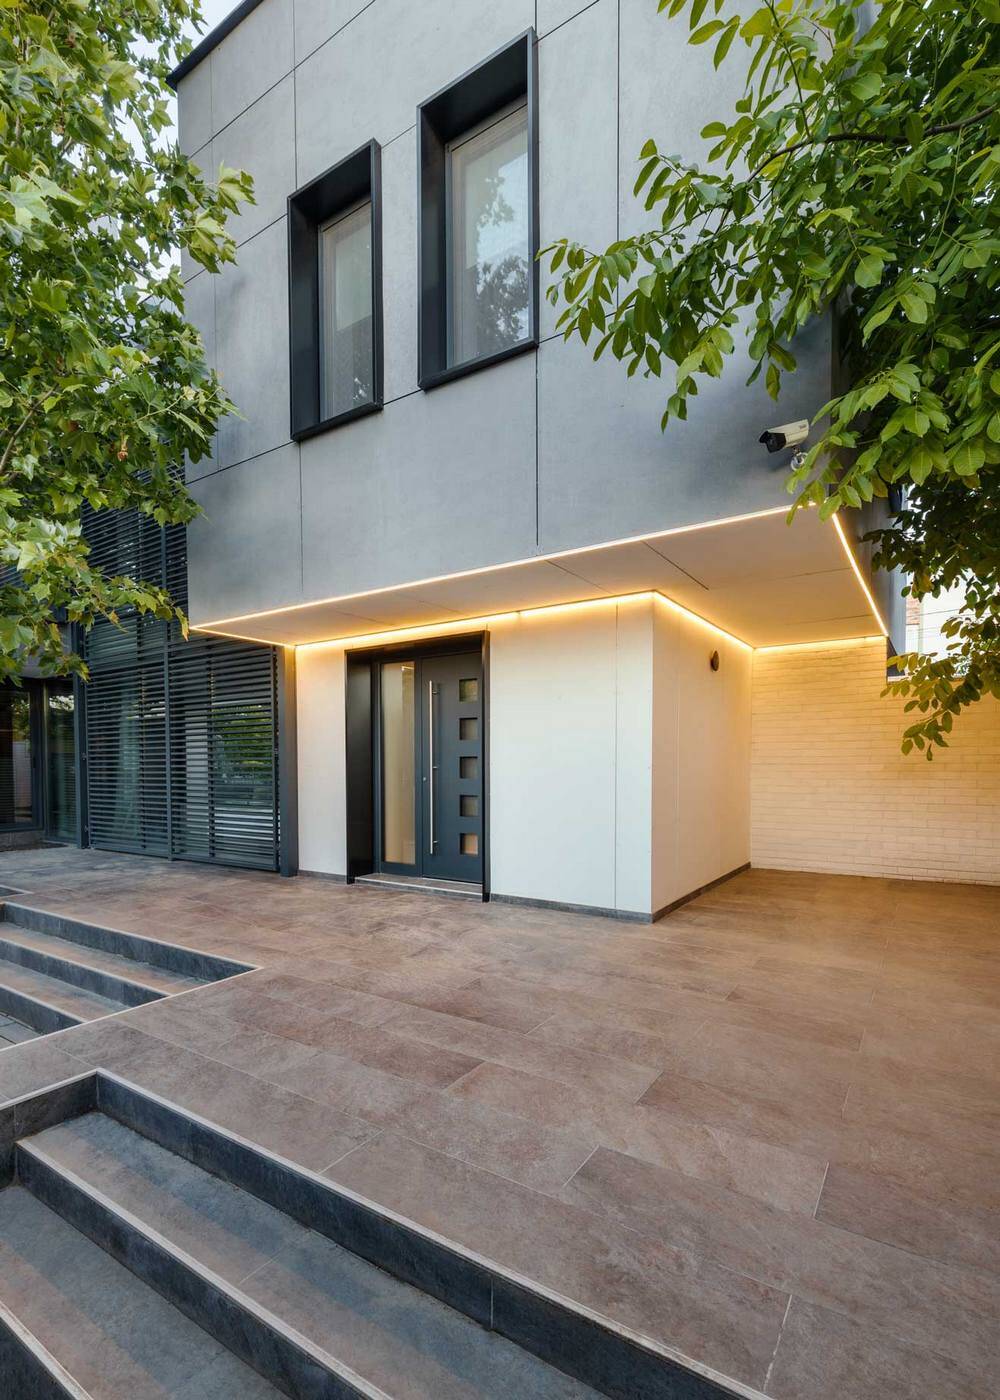 A Bigger Renovation for a Generous Home - Shades of Black by Razvan Barsan + Partners